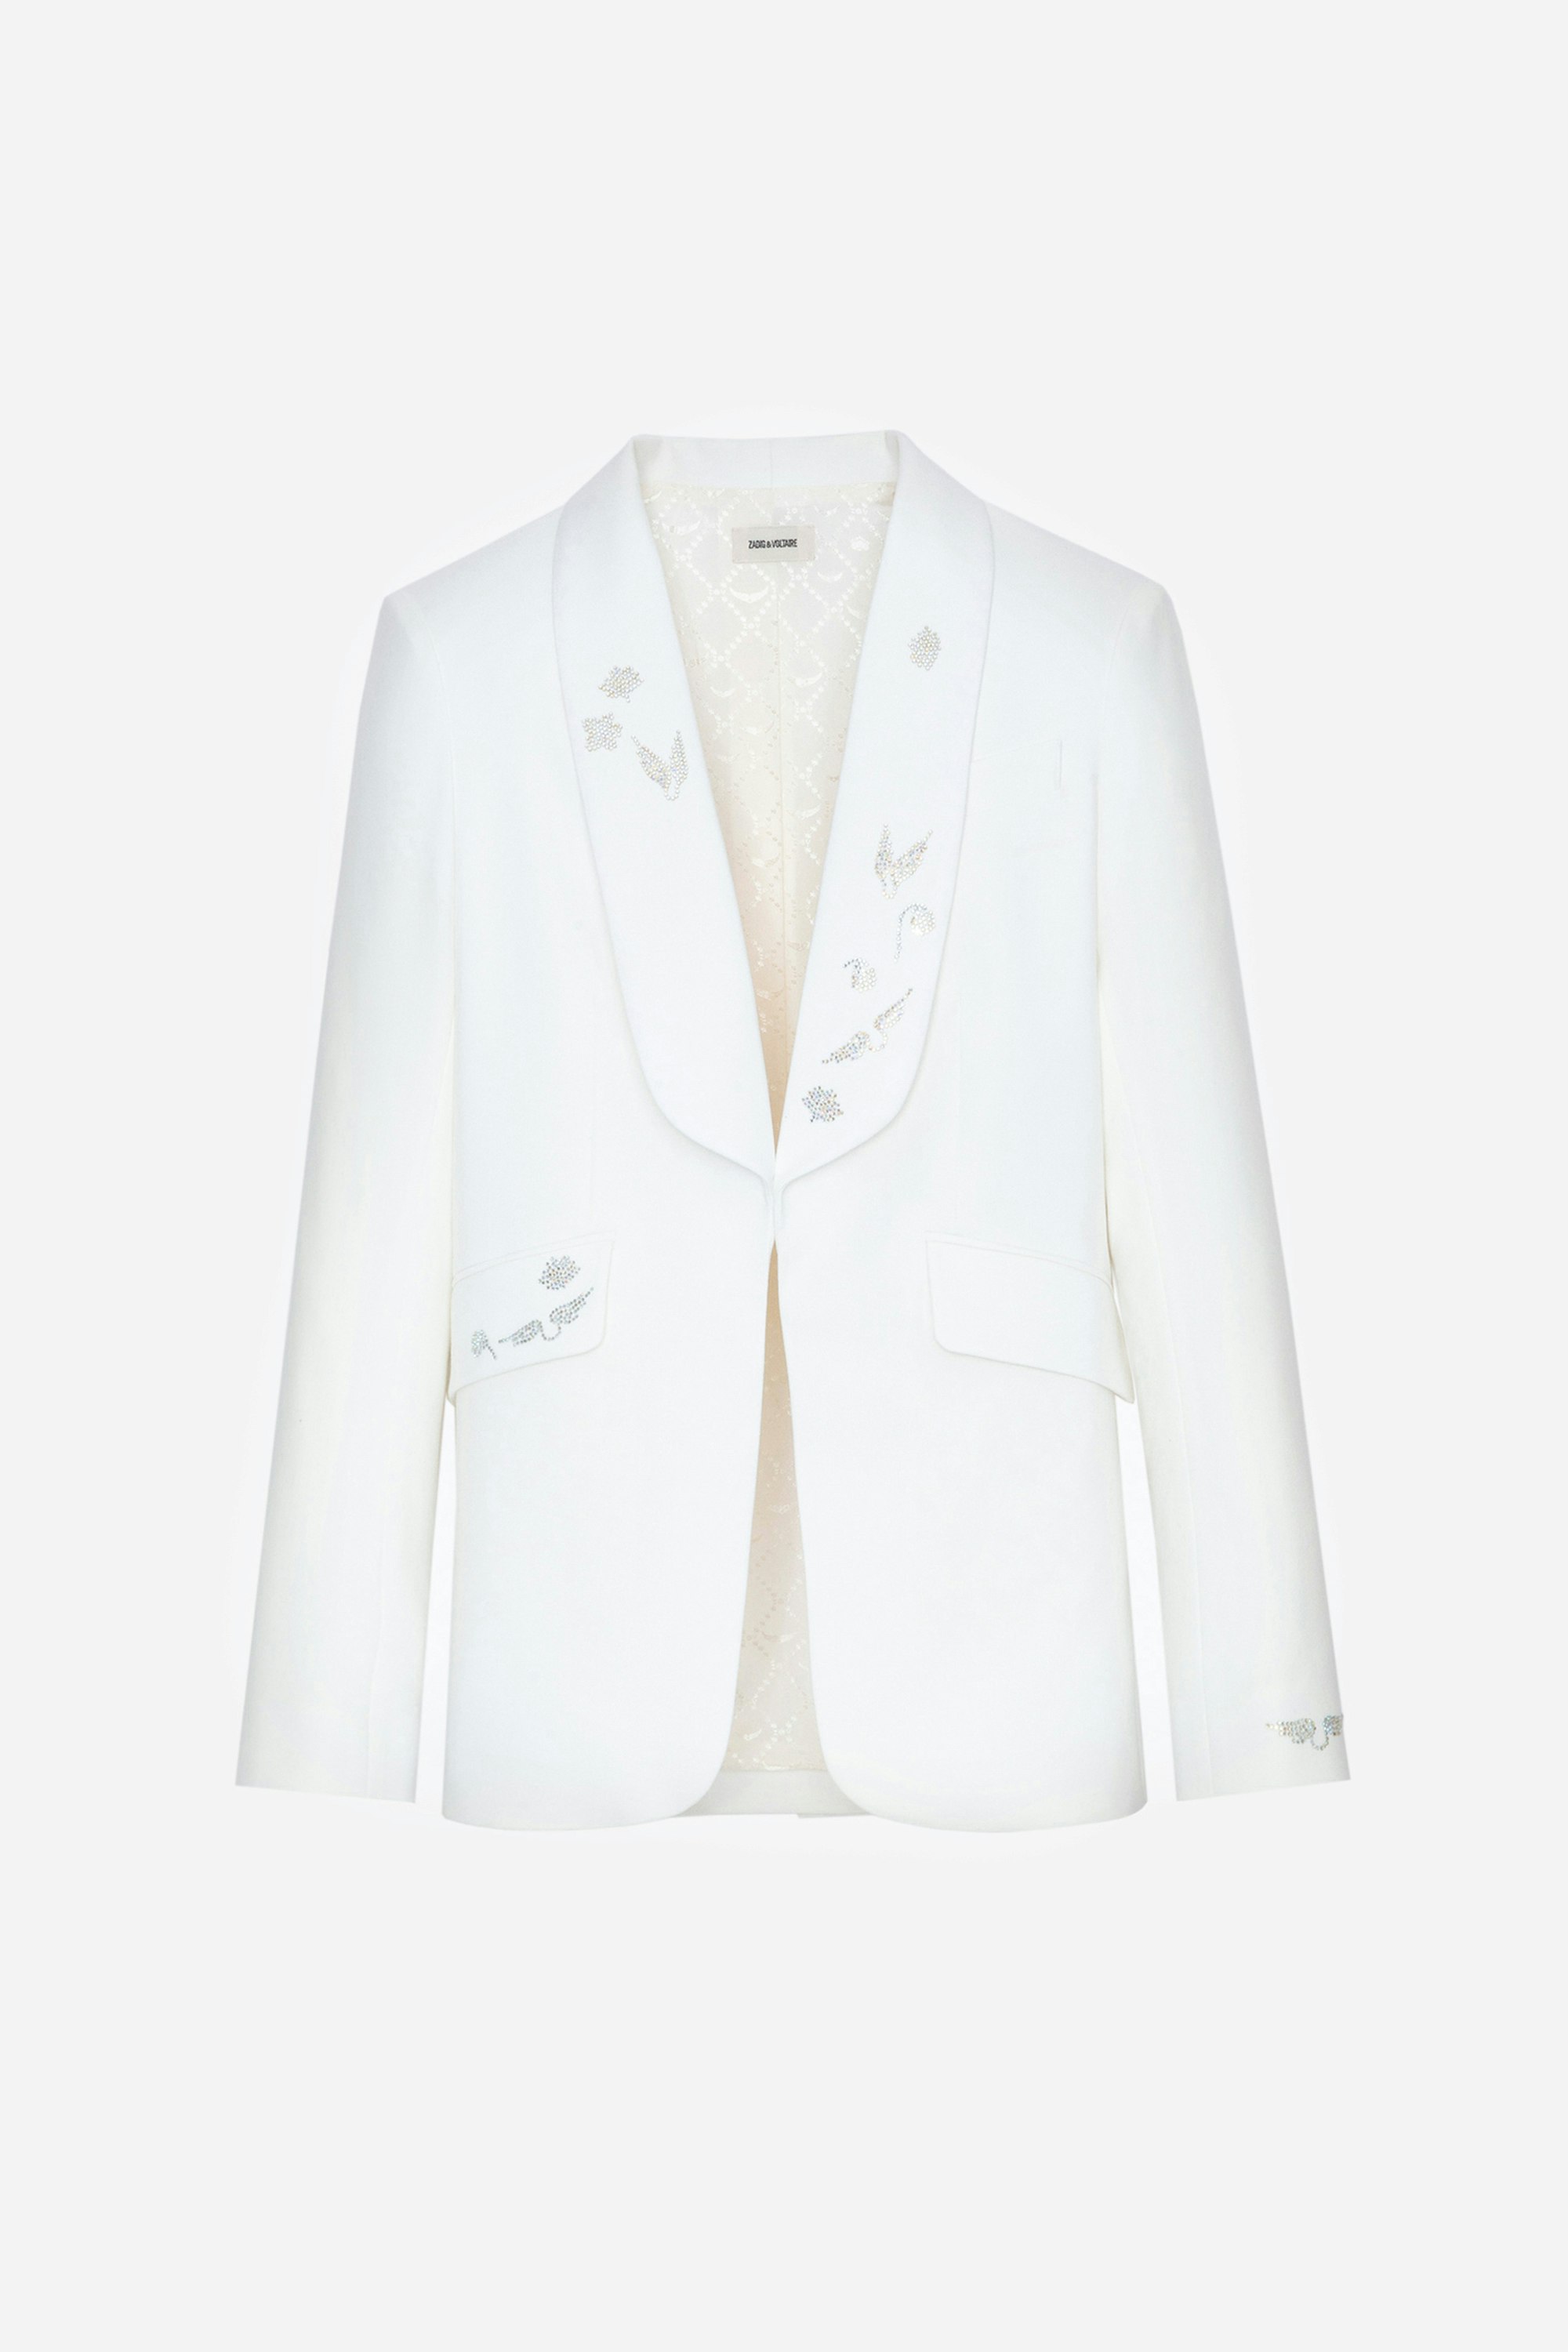 Date Diamanté Blazer - Women's white blazer featuring round collar and diamanté wing embellishment.